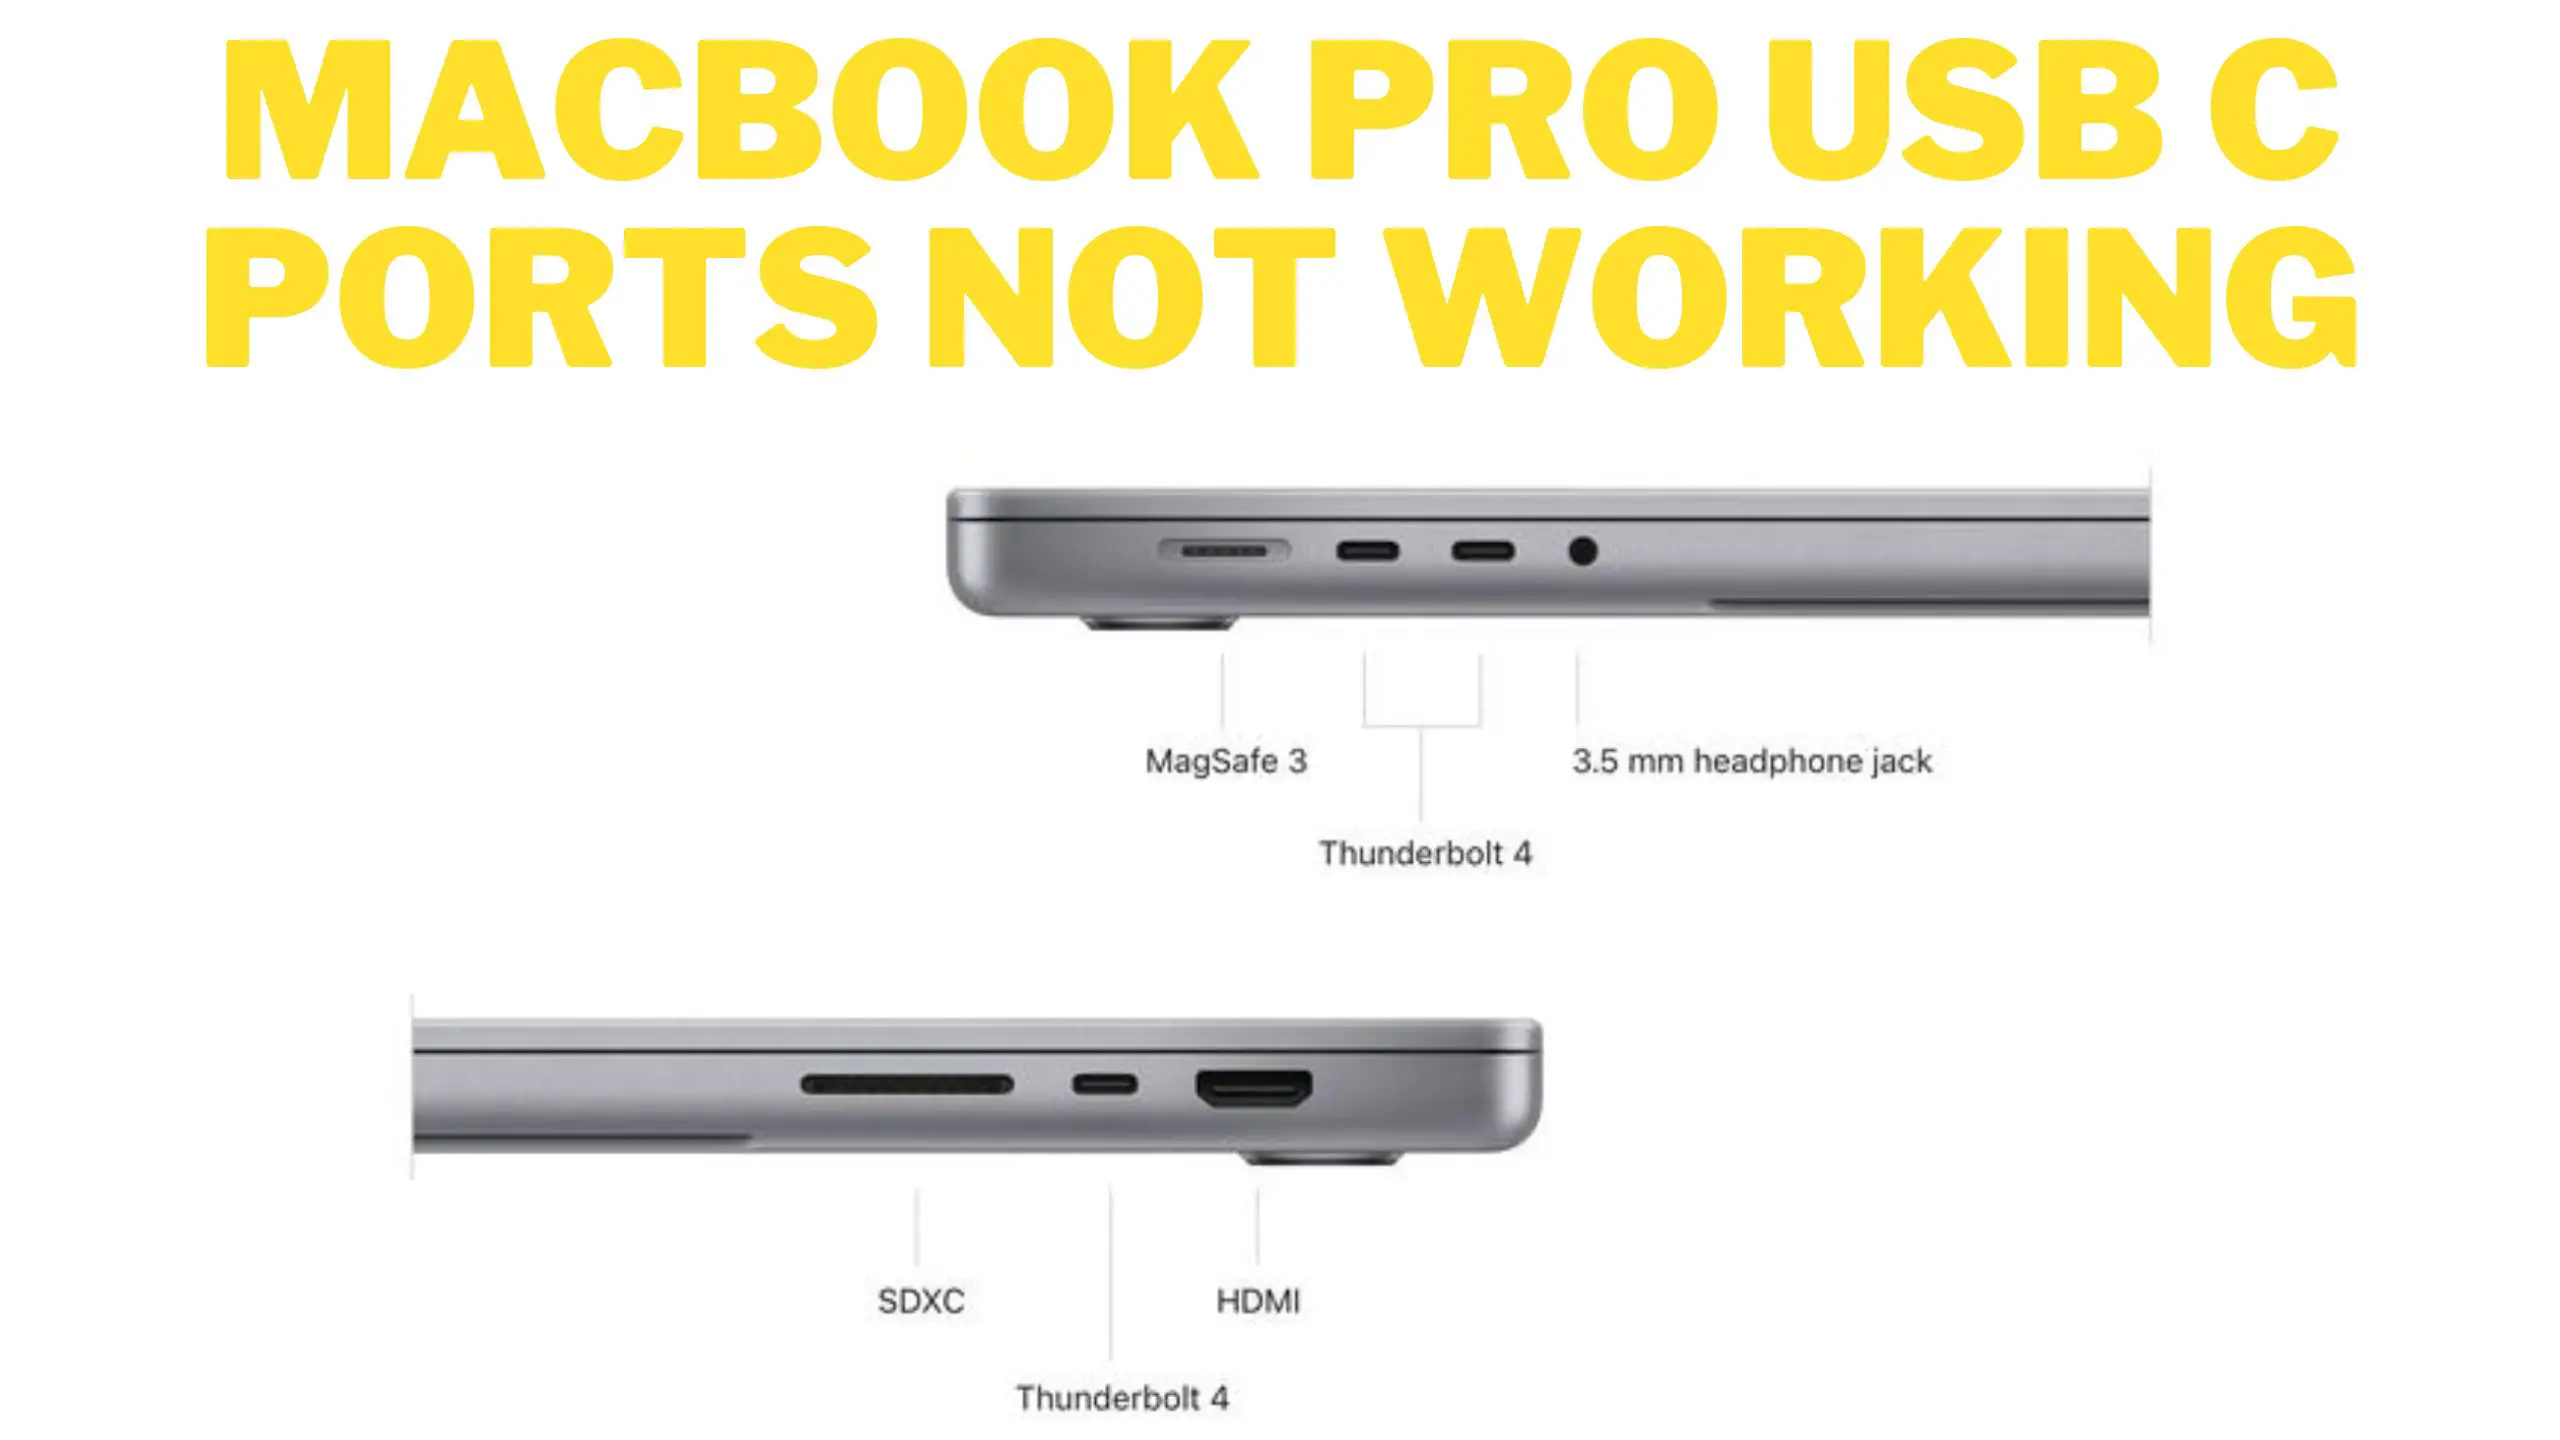 MacBook Pro USB C Ports Not Working